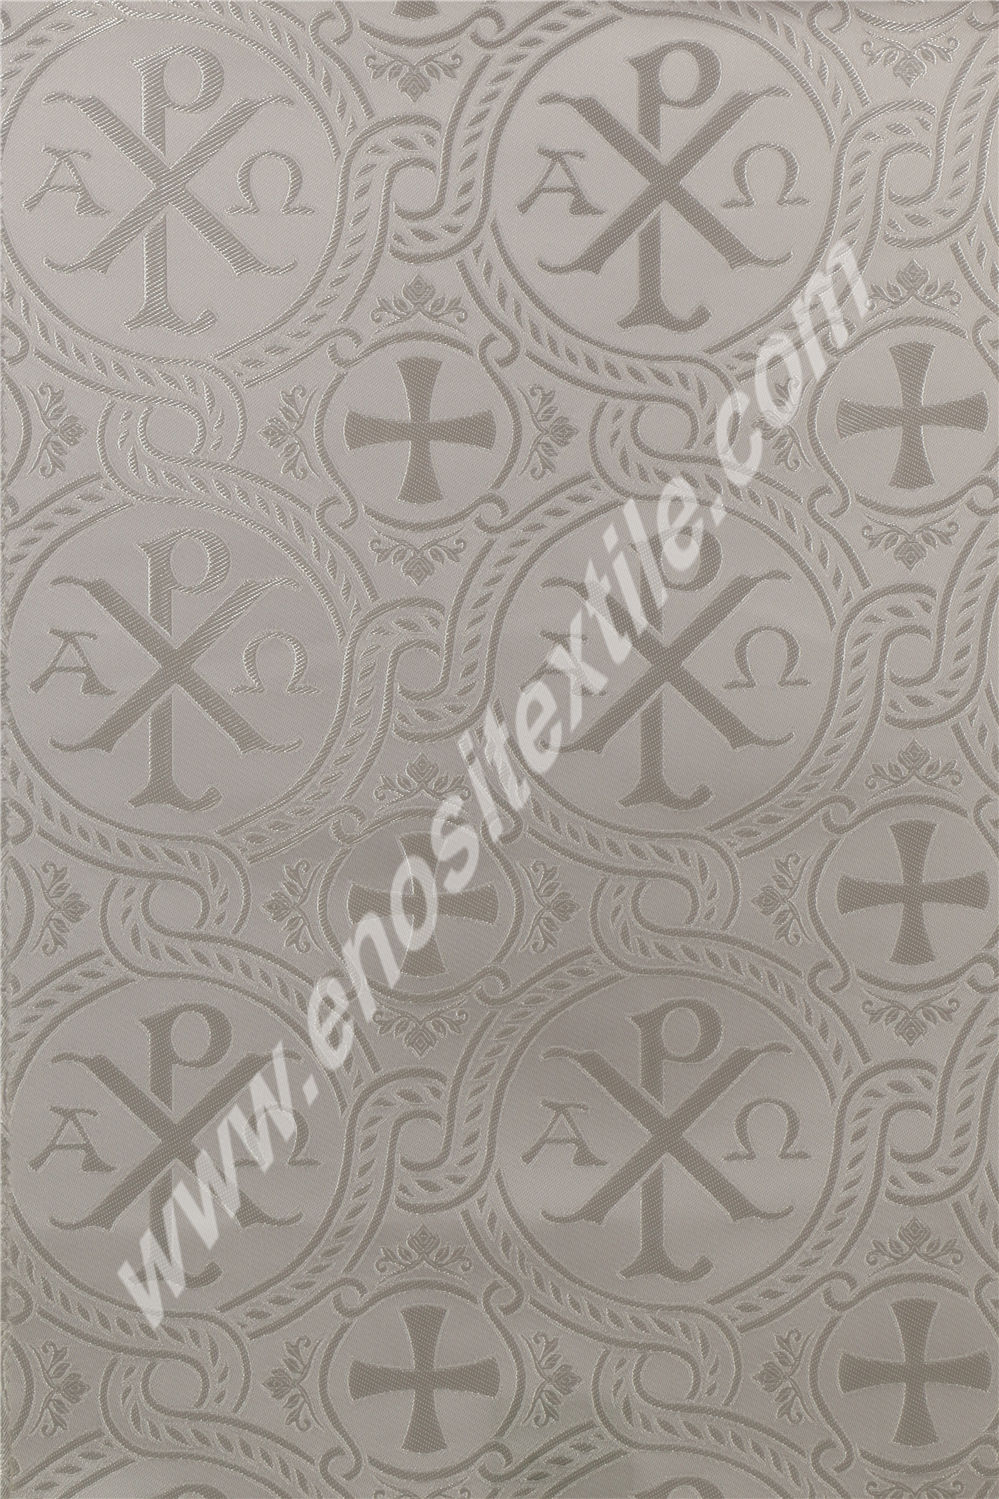 KL-023 White-Silver Brocade Fabrics